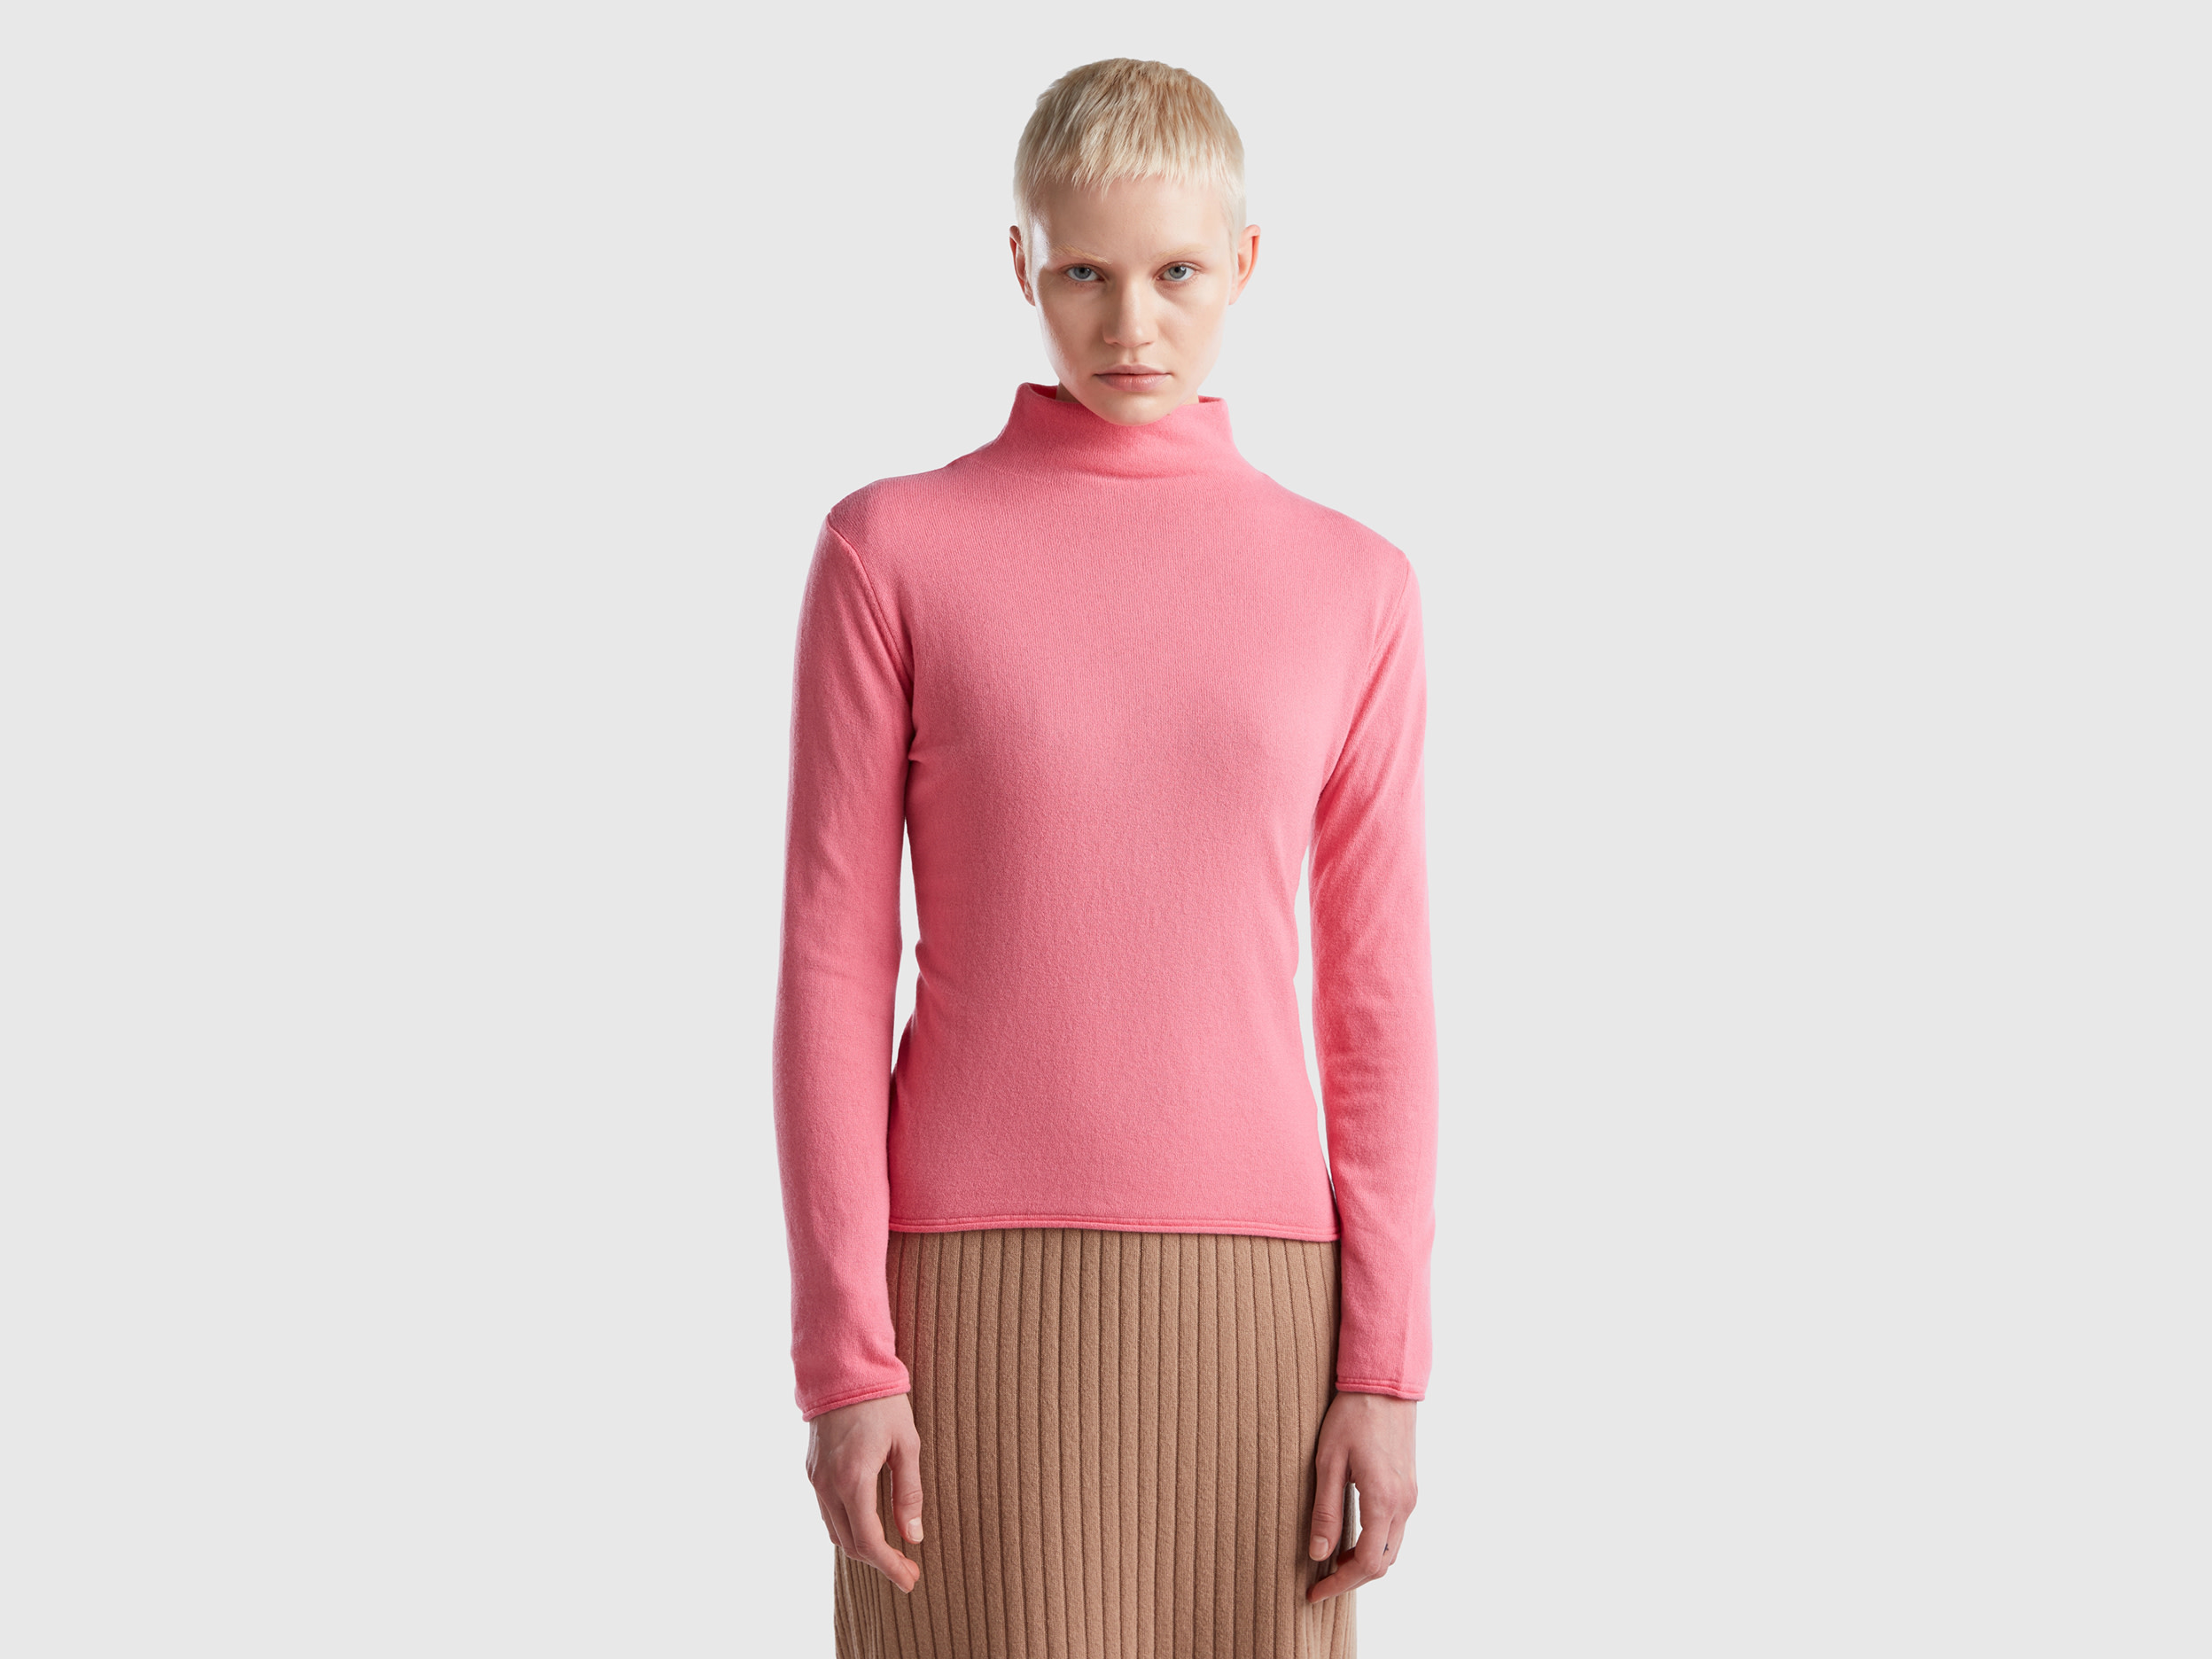 Benetton, Cashmere Blend Sweater, size M, Pink, Women